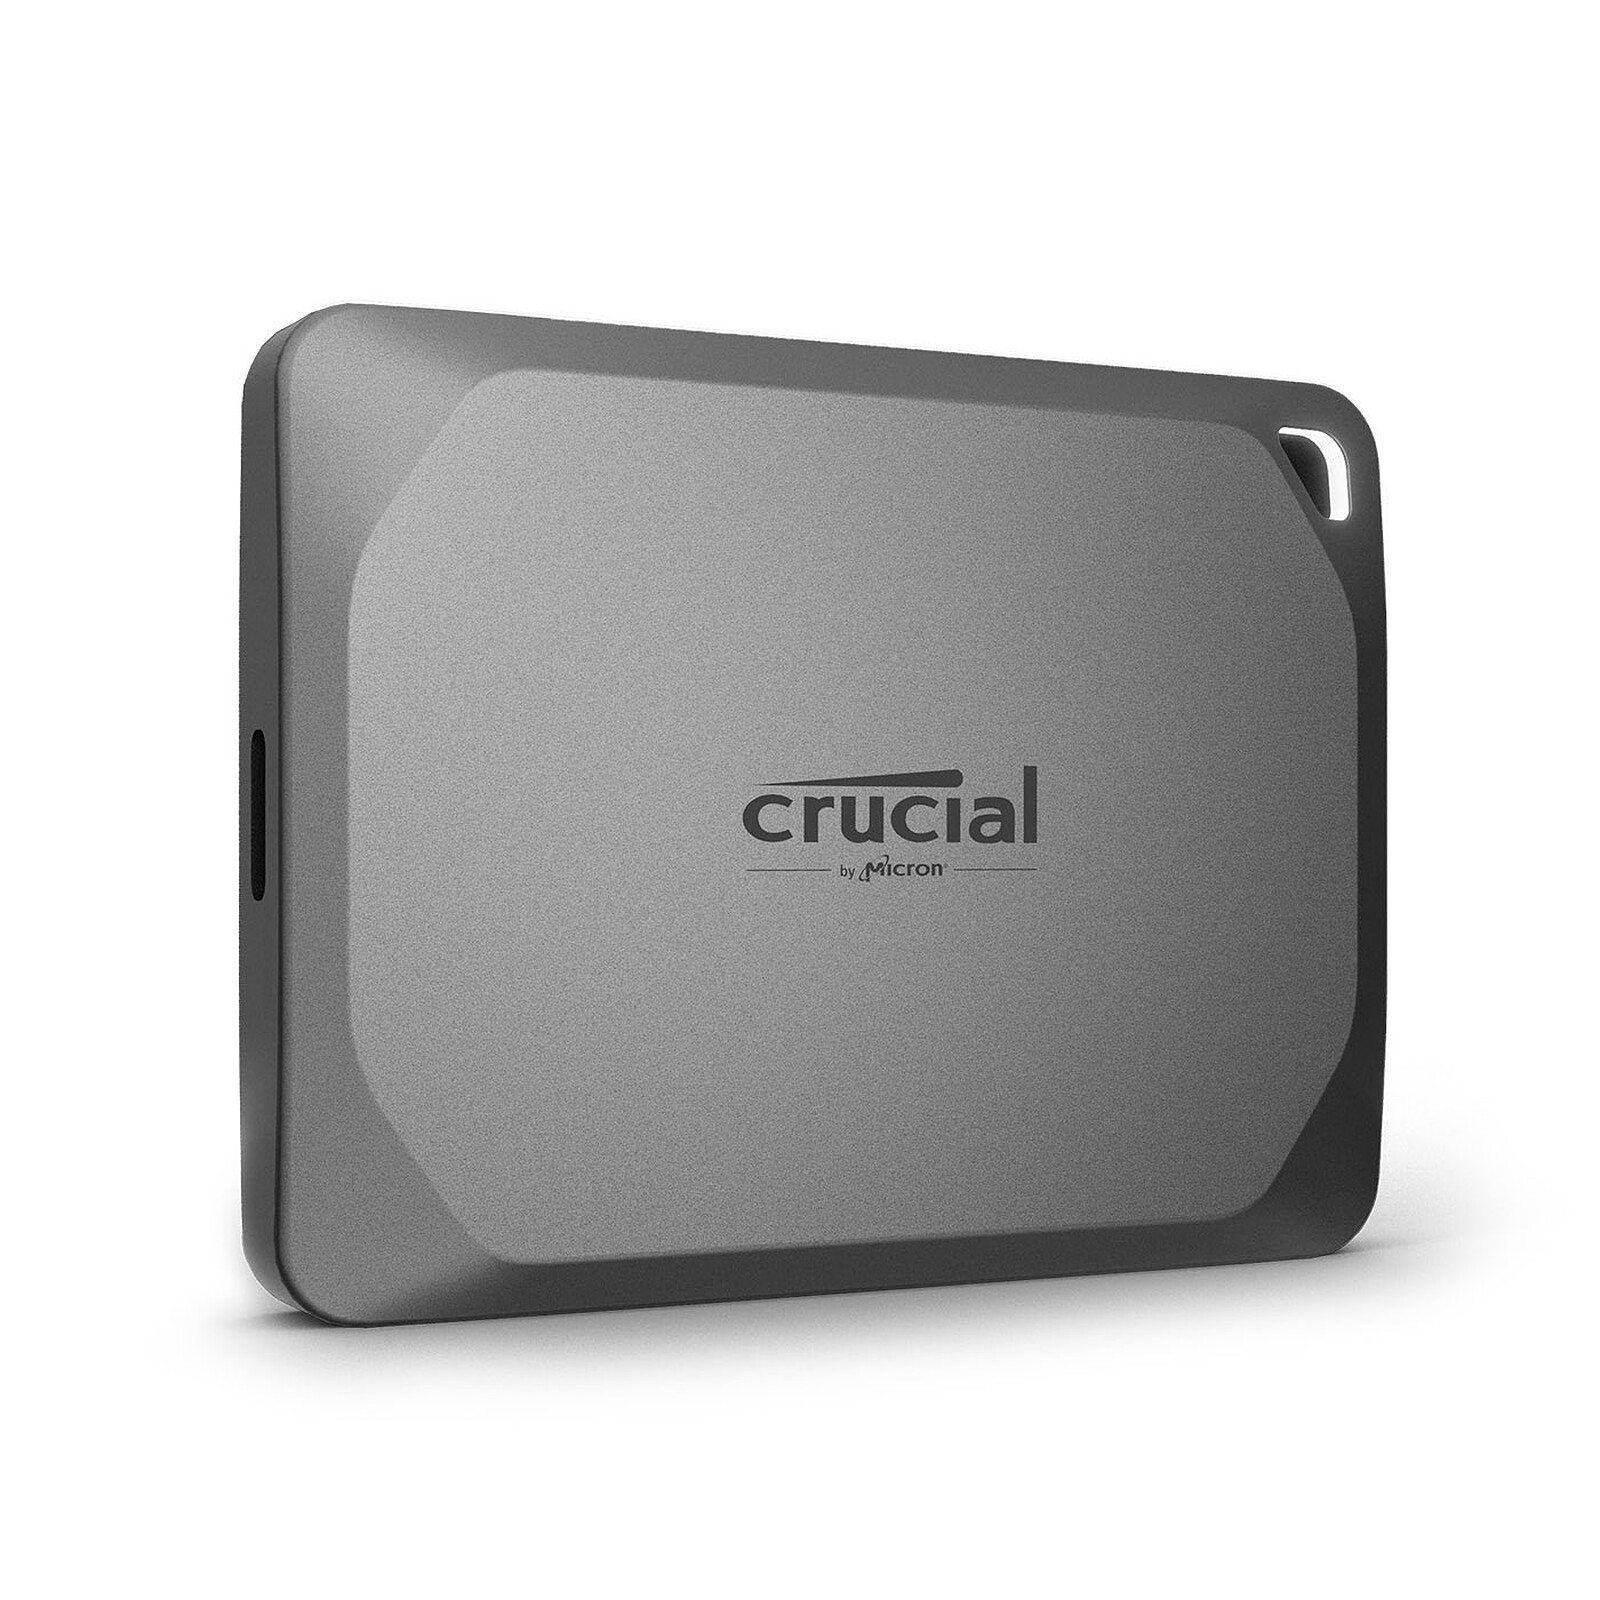 Crucial X6 1 To - Disque SSD externe USB-C - Disque dur externe